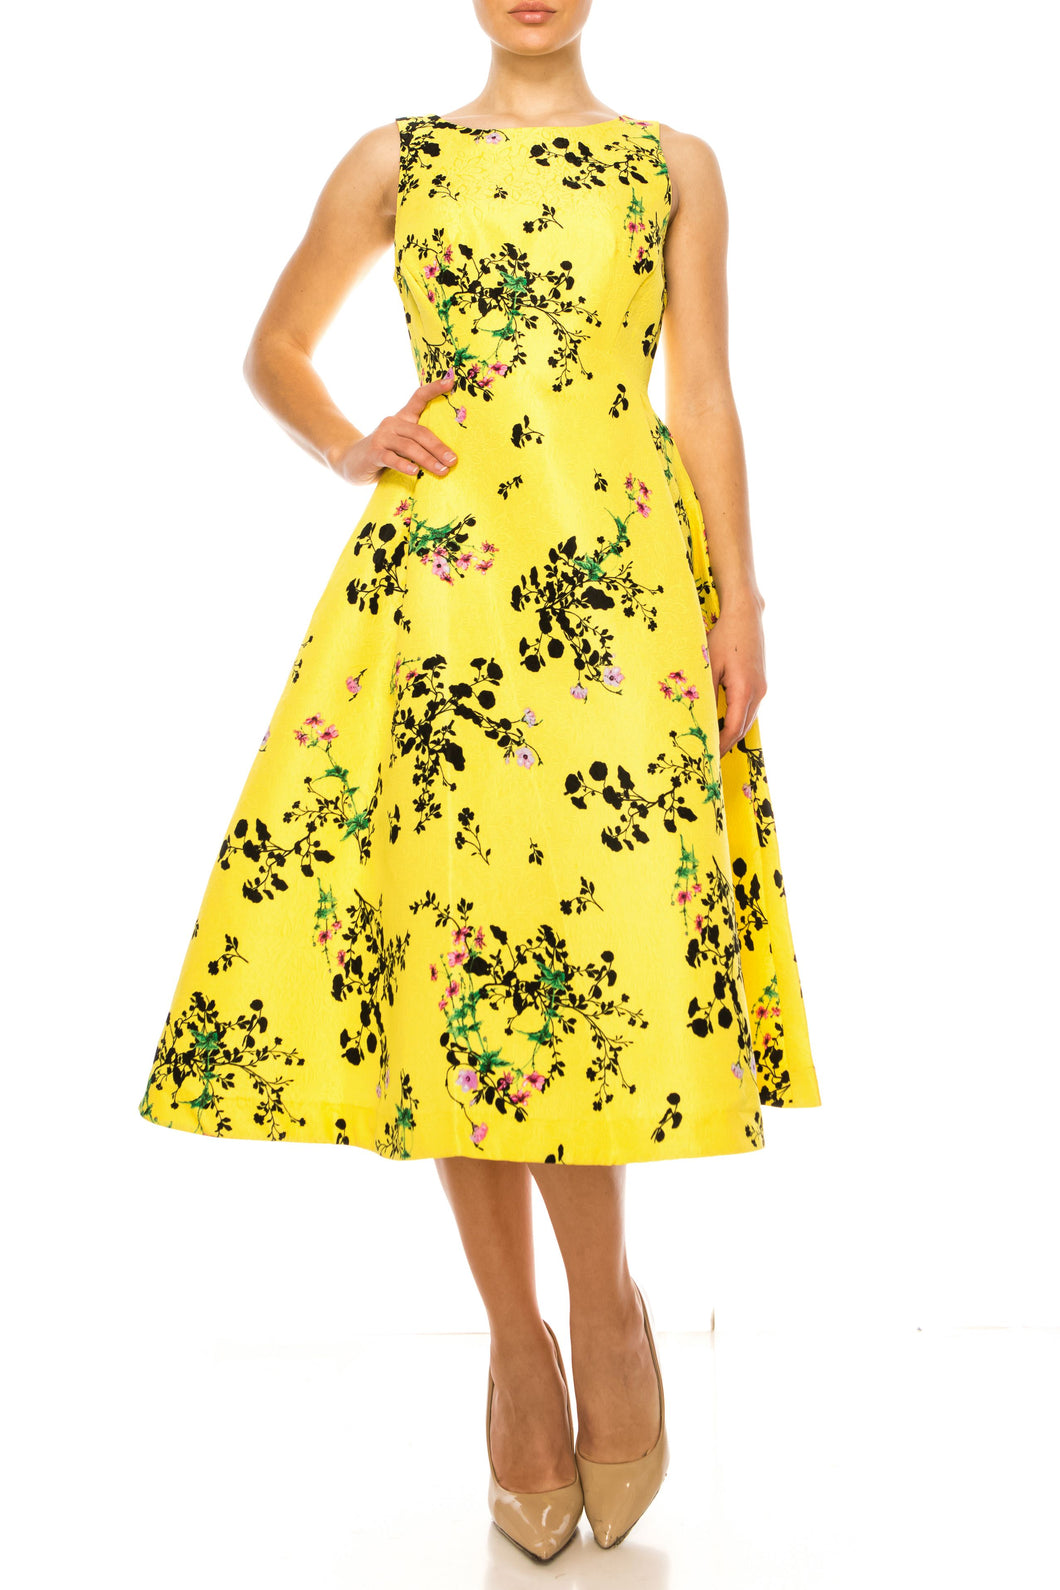 Maison Tara Lemon Bouffant Day Dress Sizes 6/8/12 Remaining! Women's Apparel Classic Attire